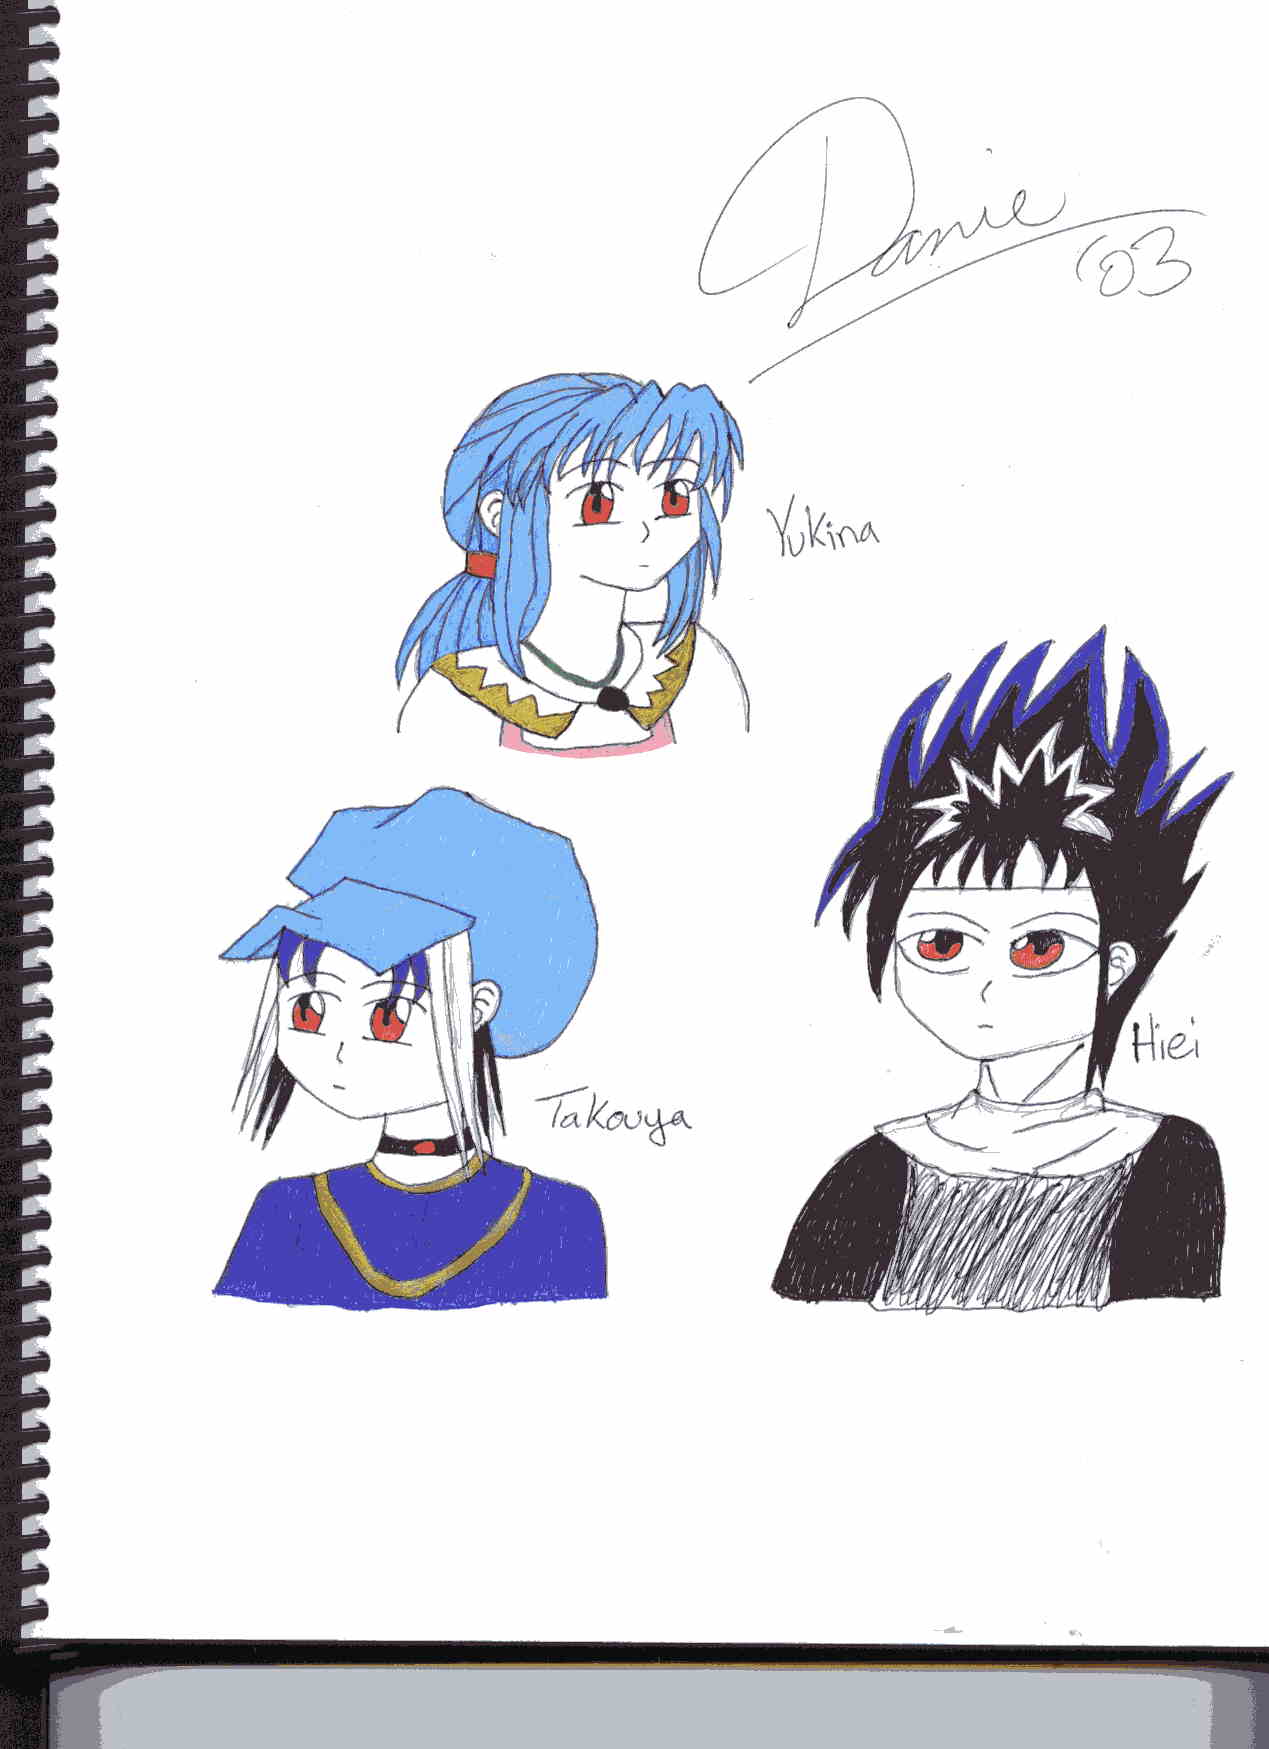 Takouya, Hiei, and Yukina by Hieis_twin_Takouya